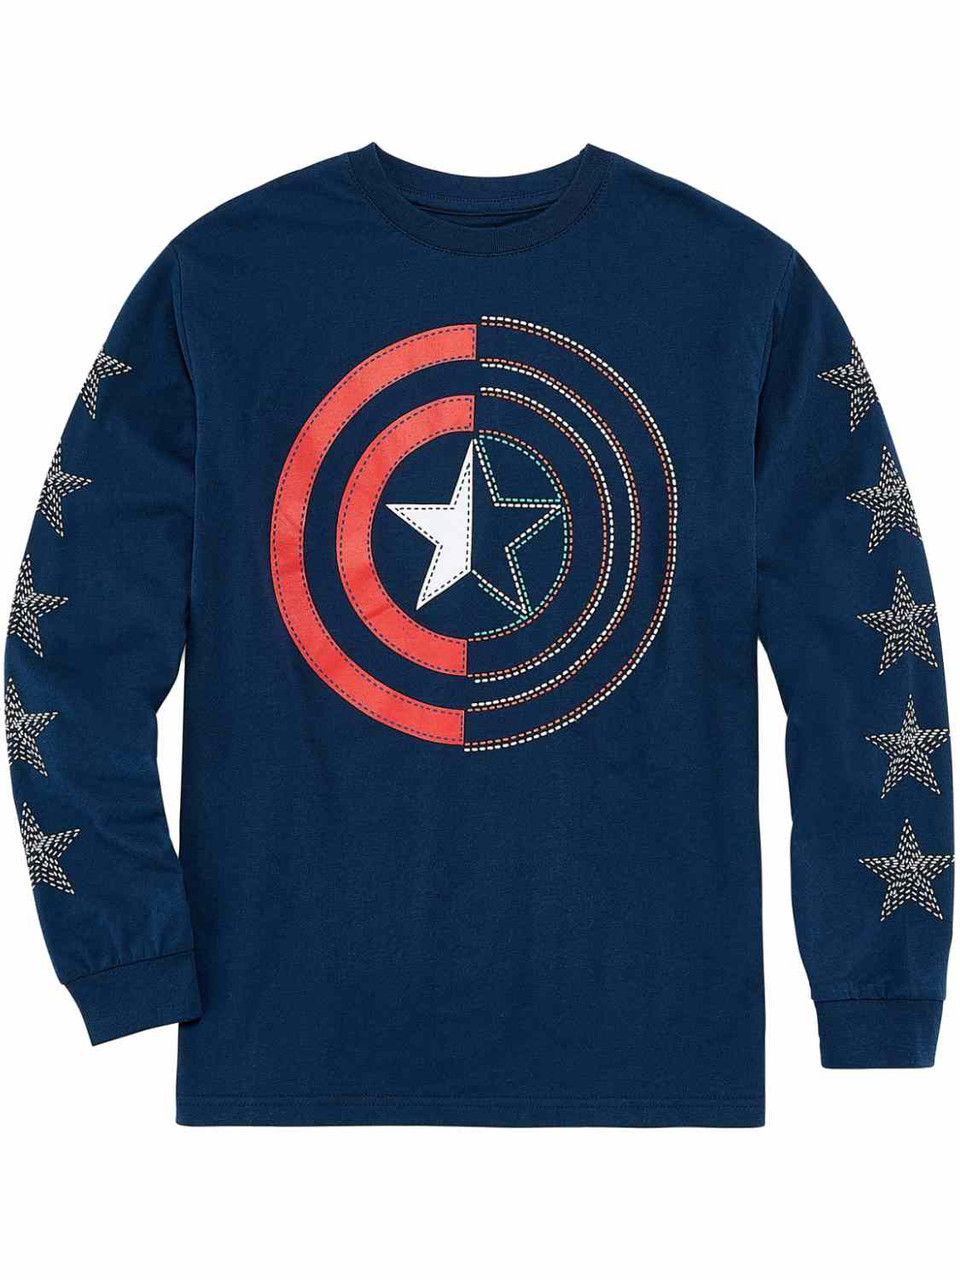 Marvel Comics Boys Red White Blue Star T Shirt Long Captain America Shirt The Primrose Lane - captain america roblox shirt